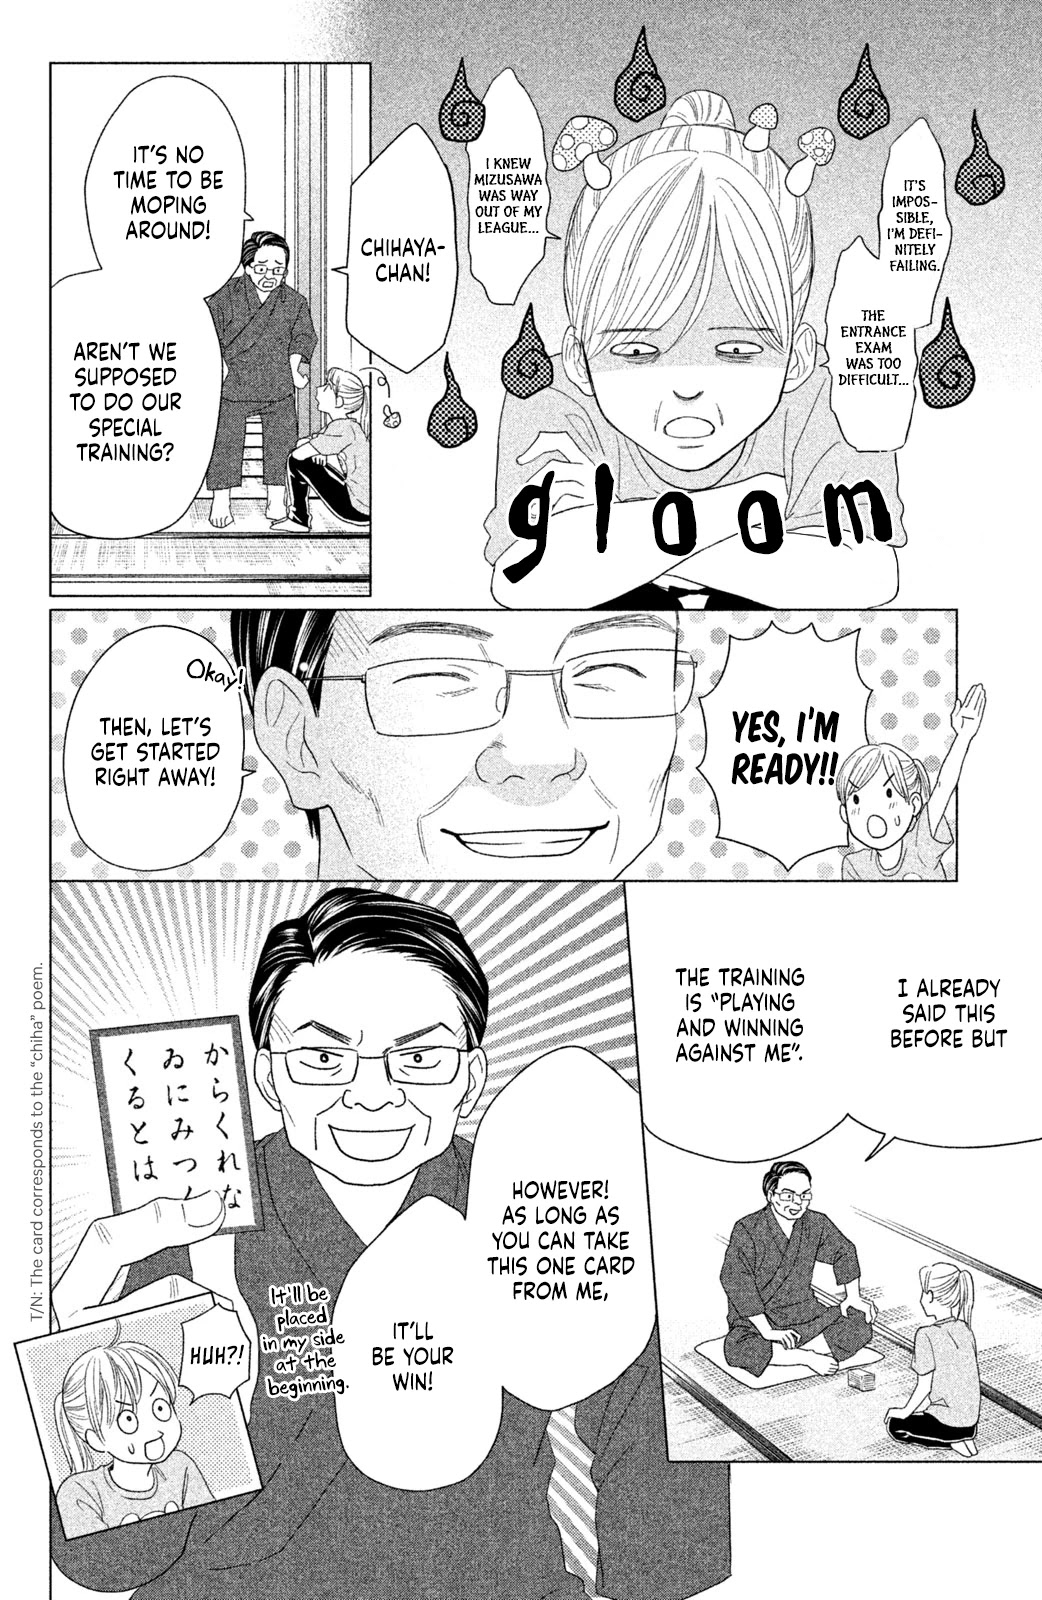 Chihayafuru: Middle School Arc - Page 3